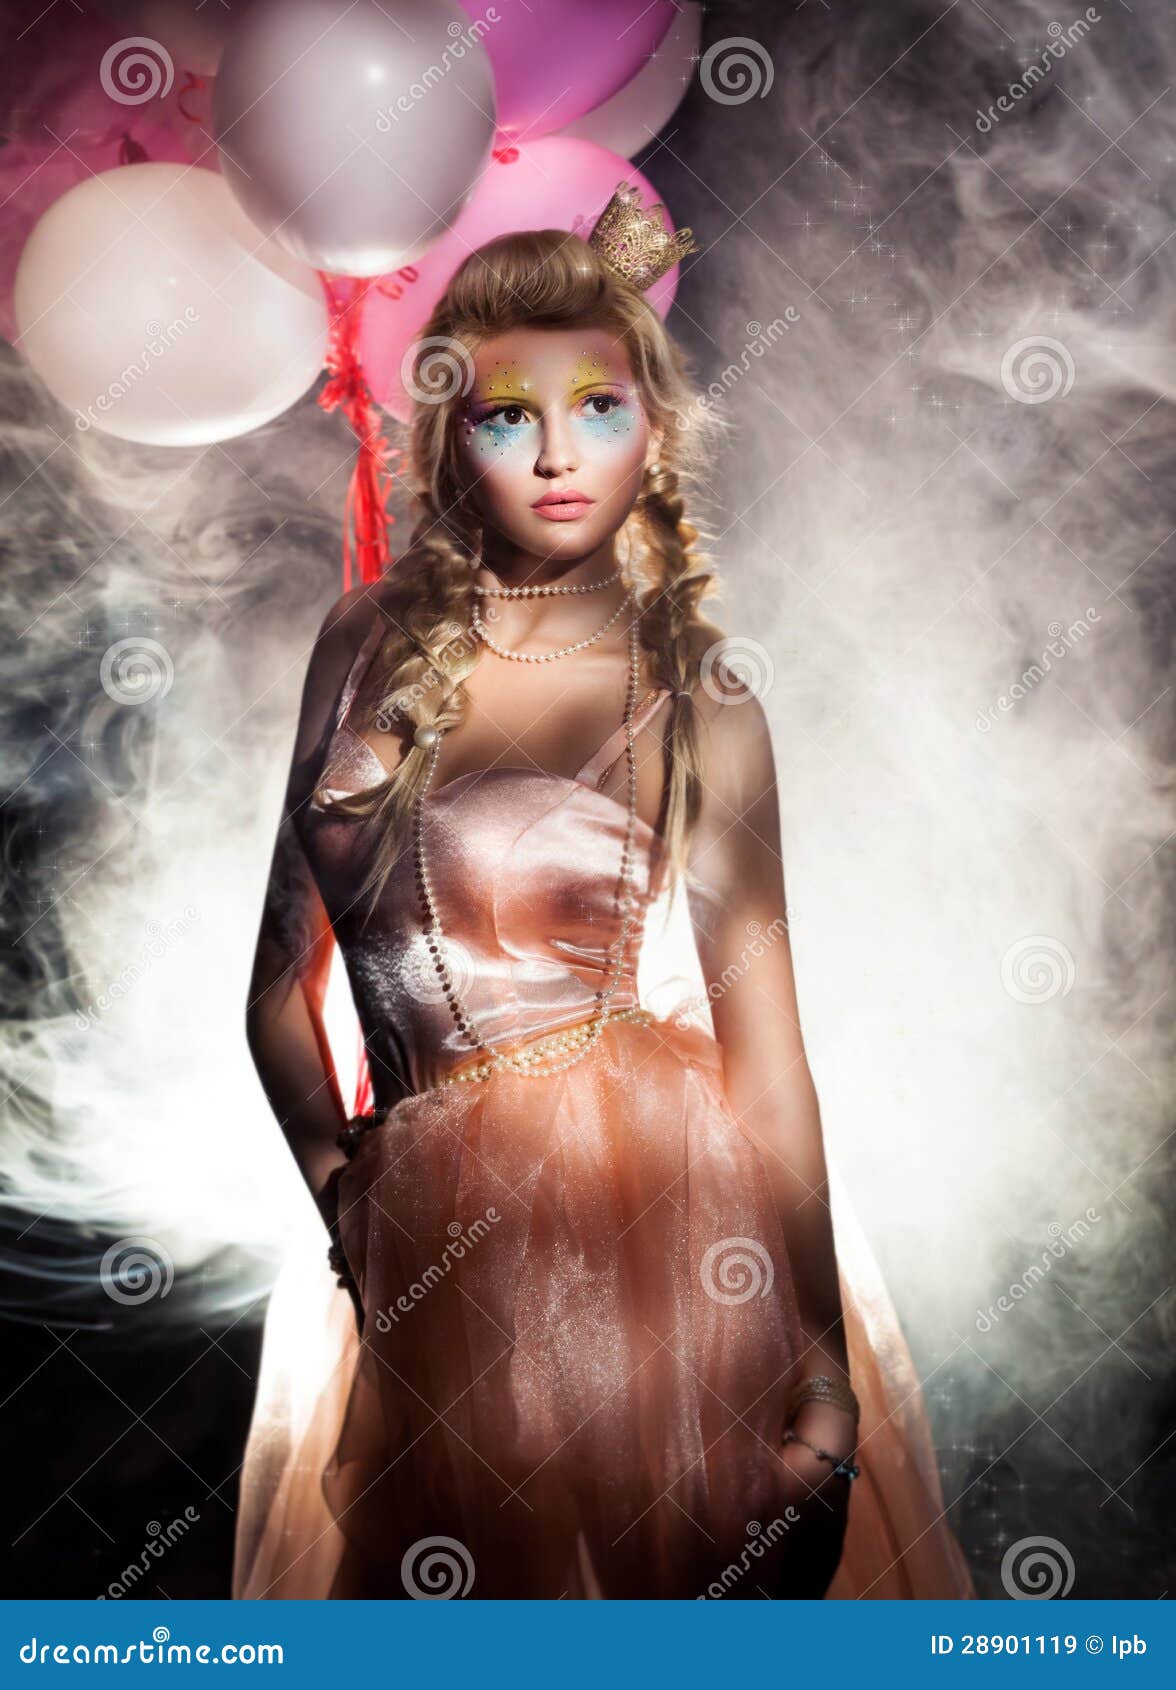 beautiful princess in pink dress with golden crown. haze